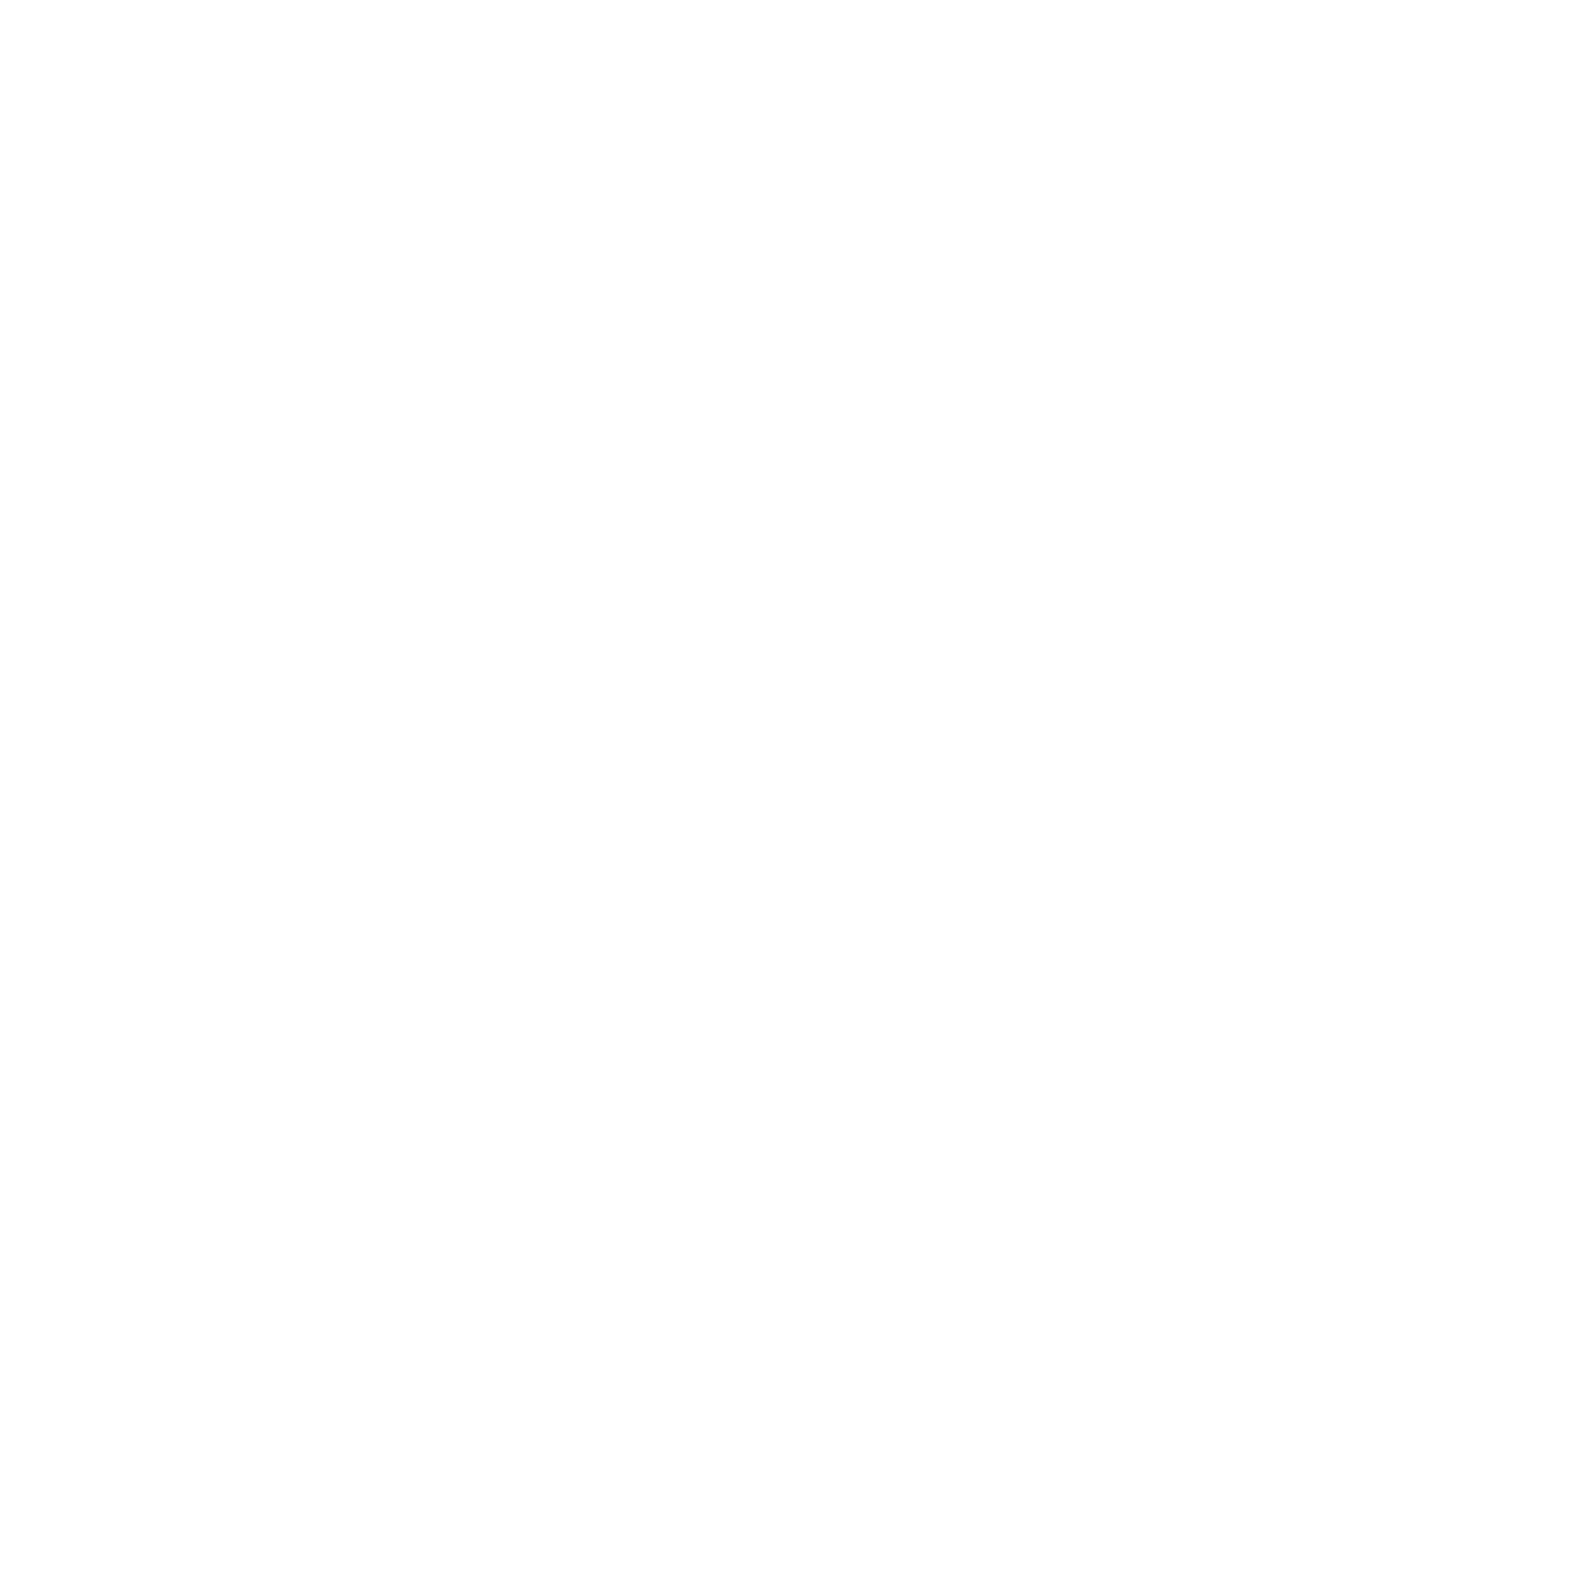 Becton Dickinson logo pour fonds sombres (PNG transparent)